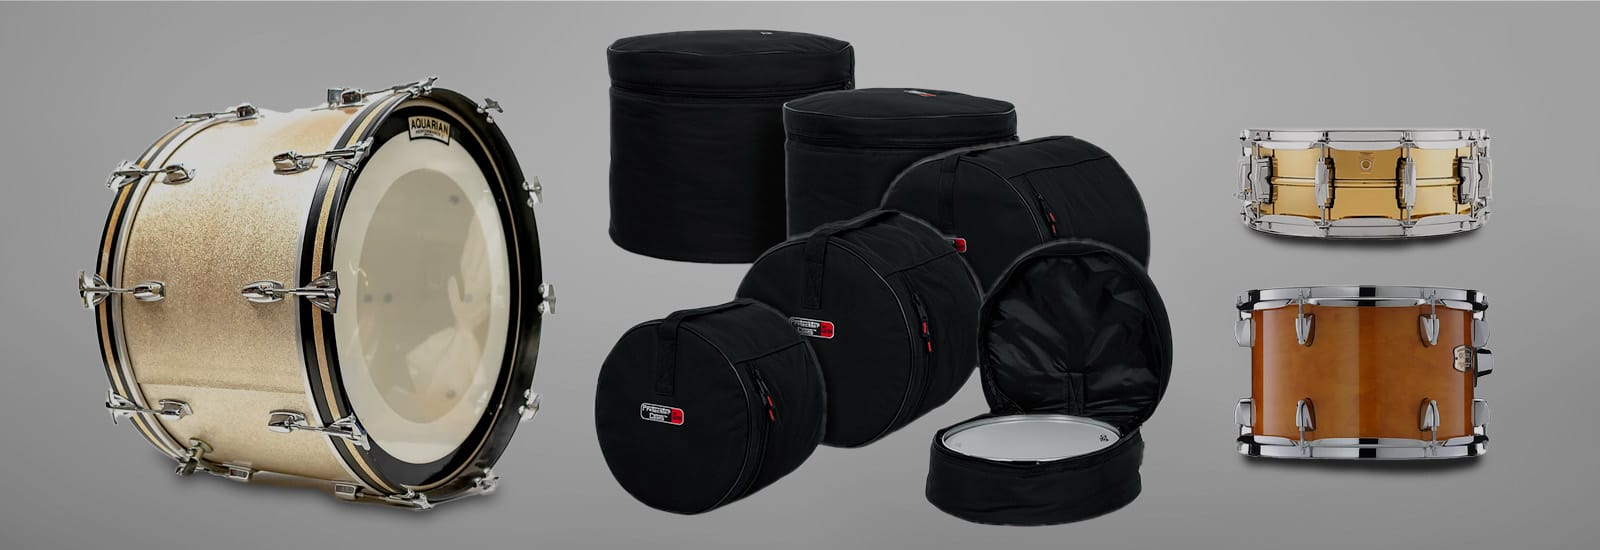 Tama Dss48s Drum Bag Set 4-piece Standard 18-inch, 14-inch, 14-inch,  12-inch | Music Works